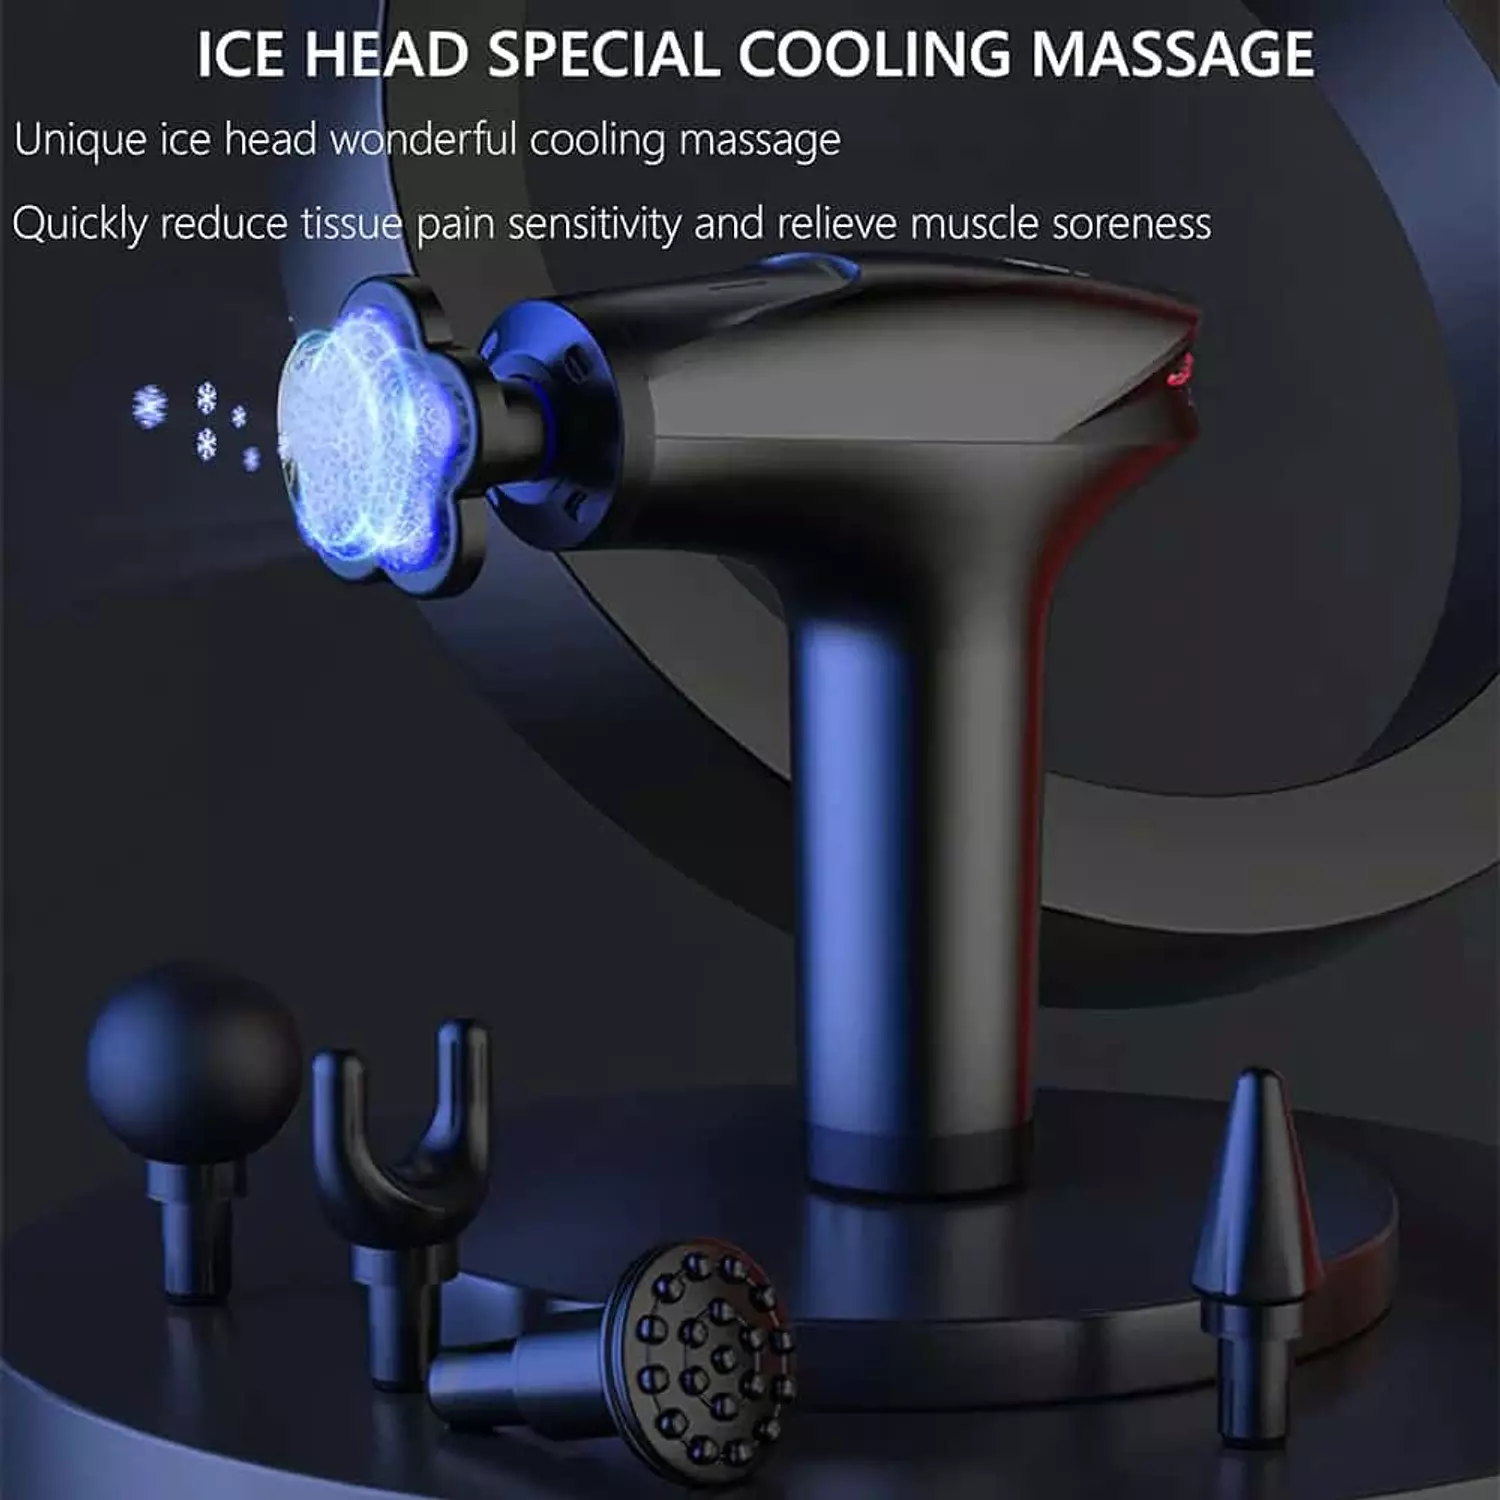 Ice head massage gun hover image